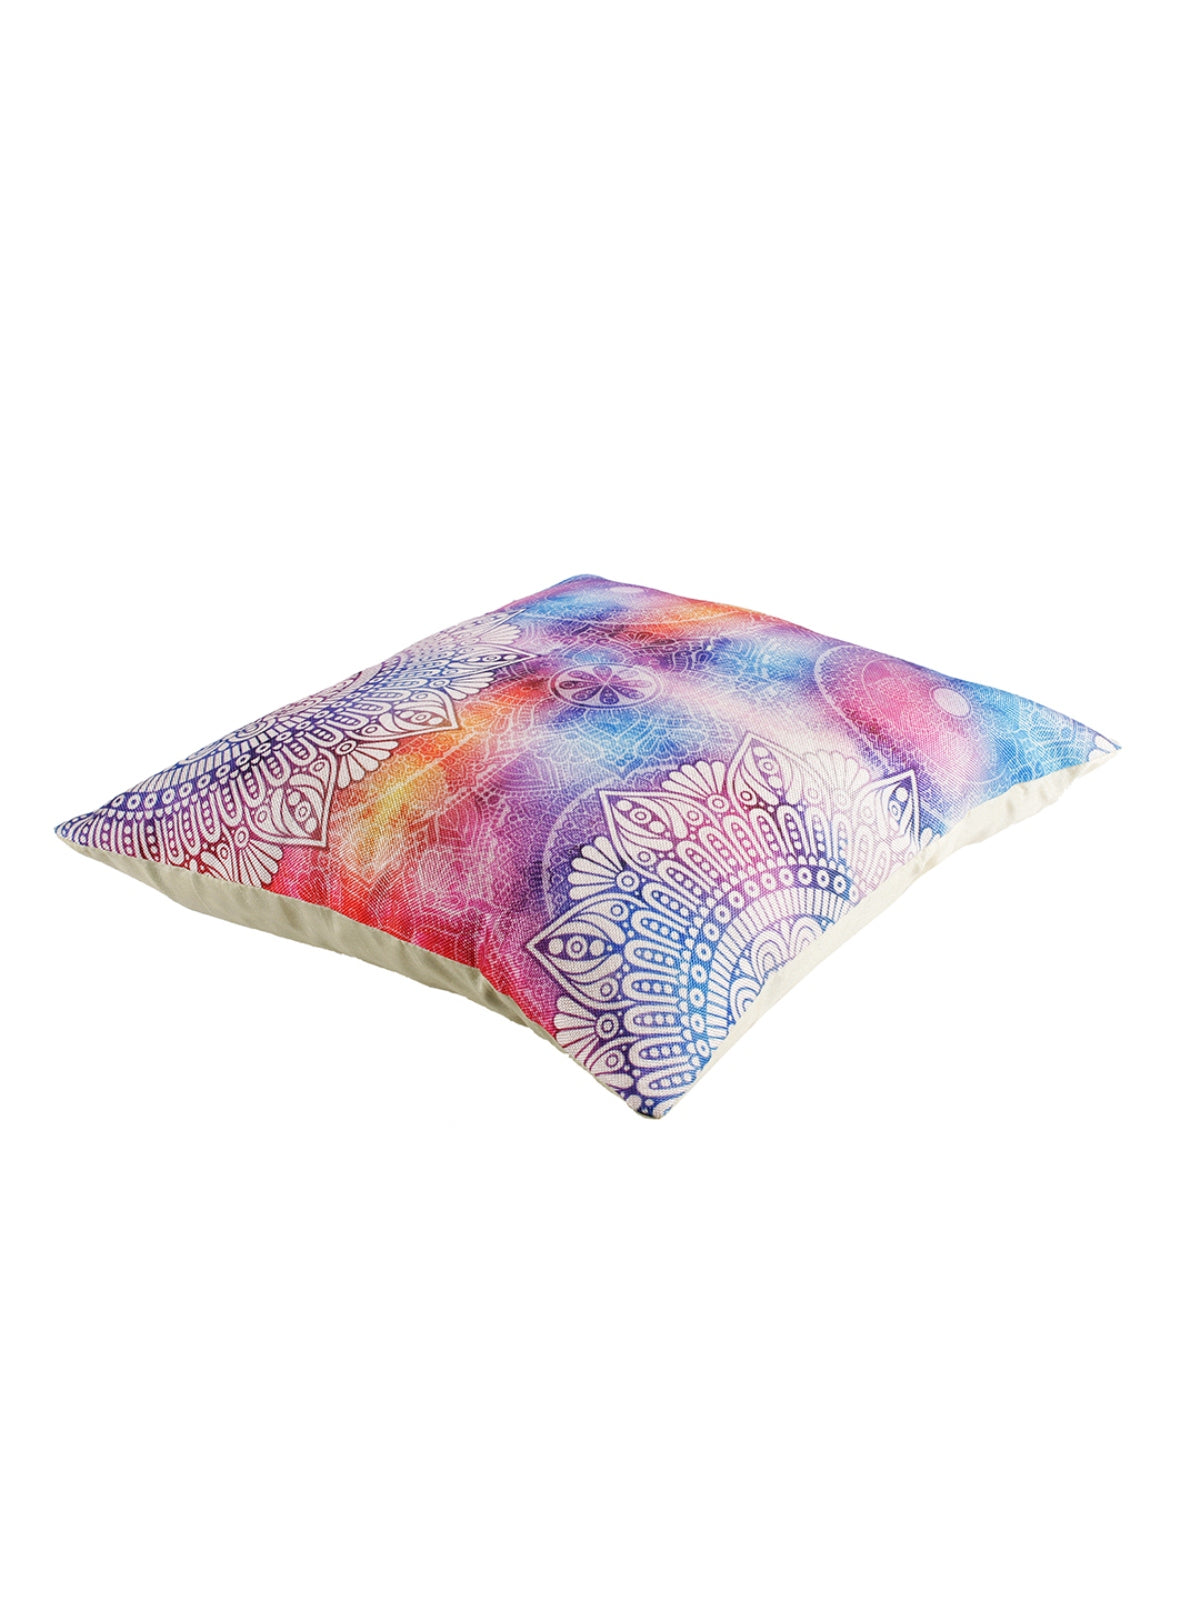 Mandala Jute Cushion Cover 16x16 Inch, Set of 5 - Multicolor